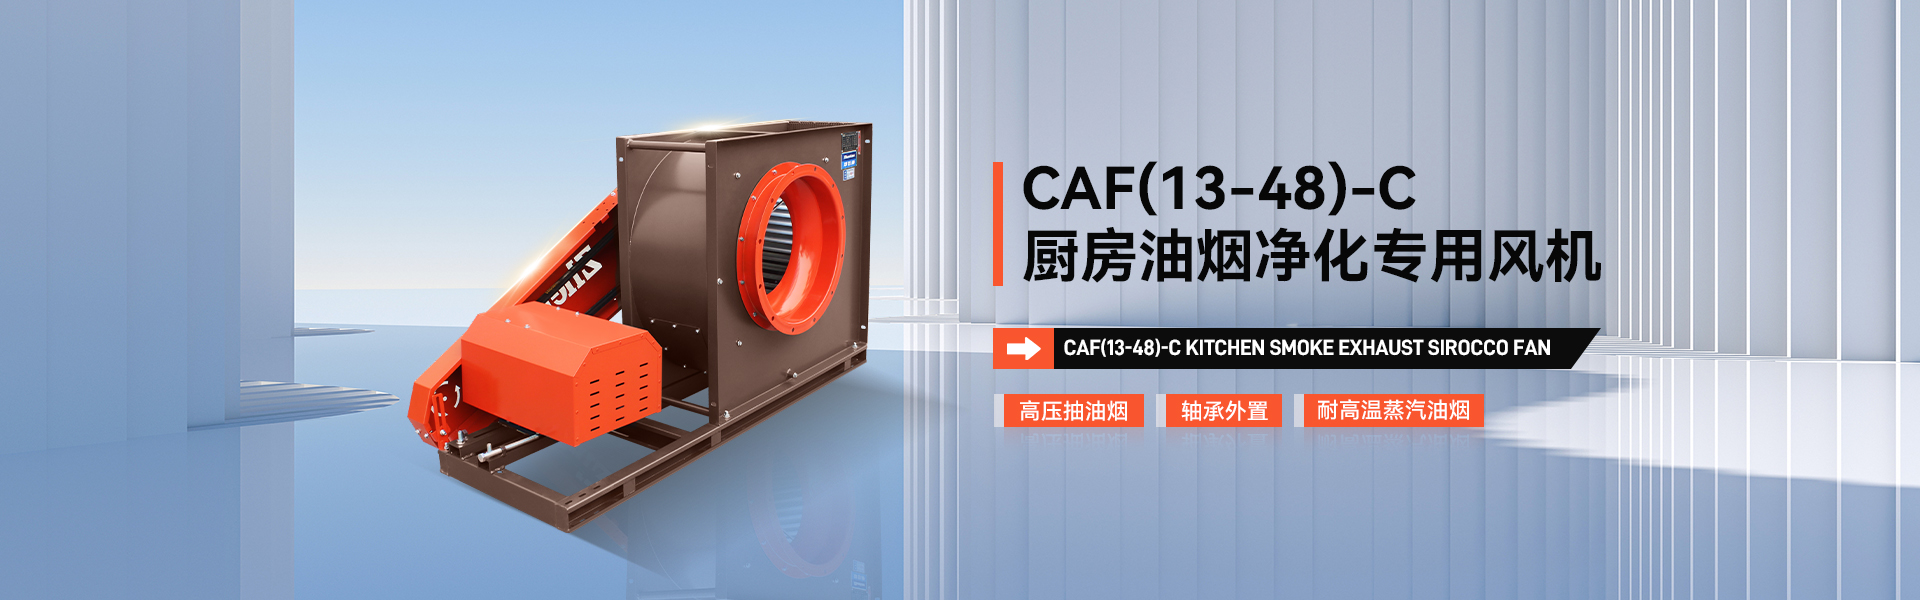 CAF(13-48)-C厨房油烟净化专用风机